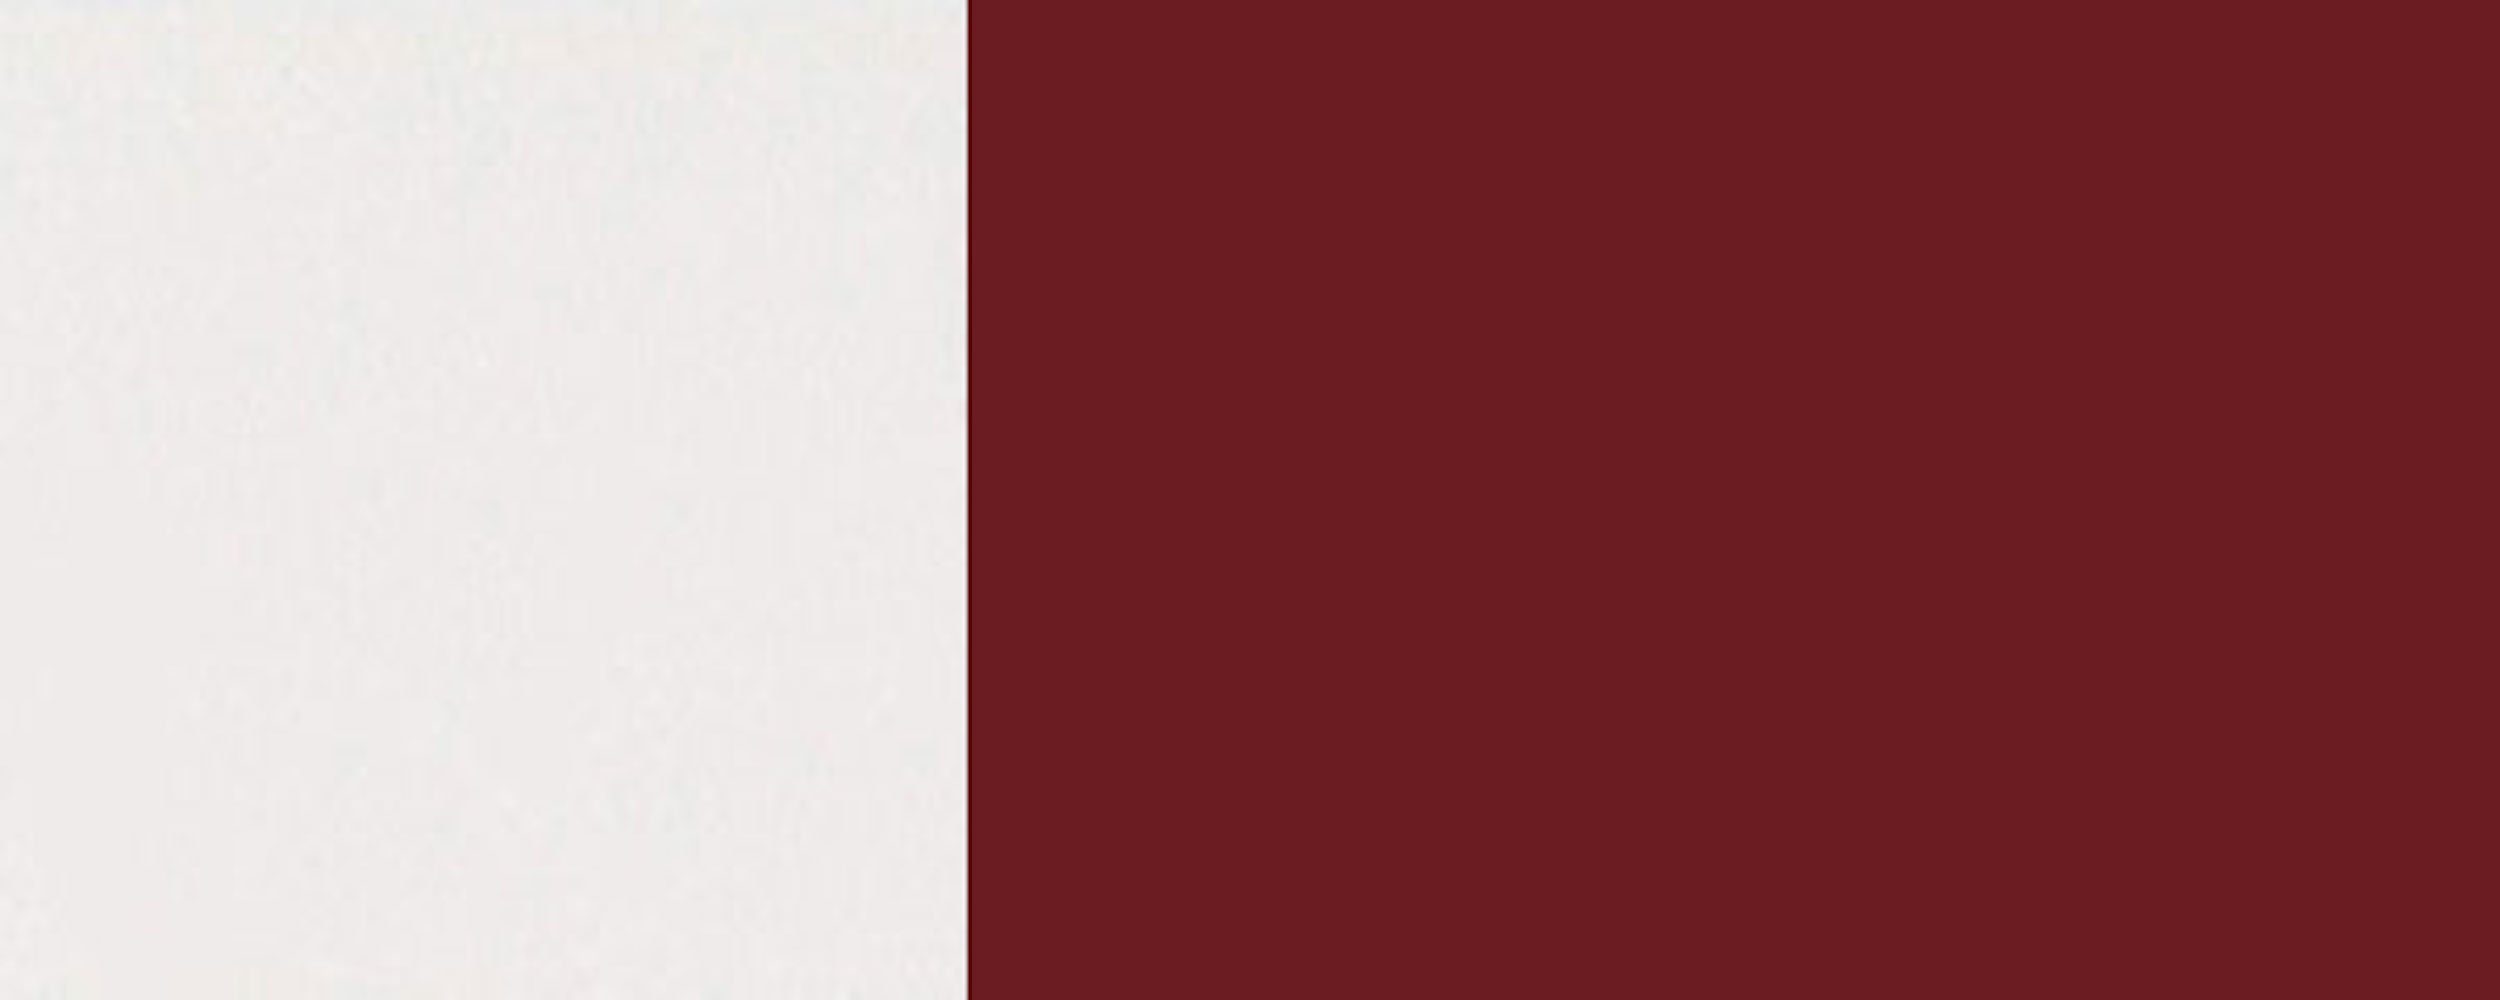 1-türig Klapphängeschrank und purpurrot 3004 Rimini wählbar RAL (Rimini) Front- Feldmann-Wohnen matt 60cm Korpusfarbe